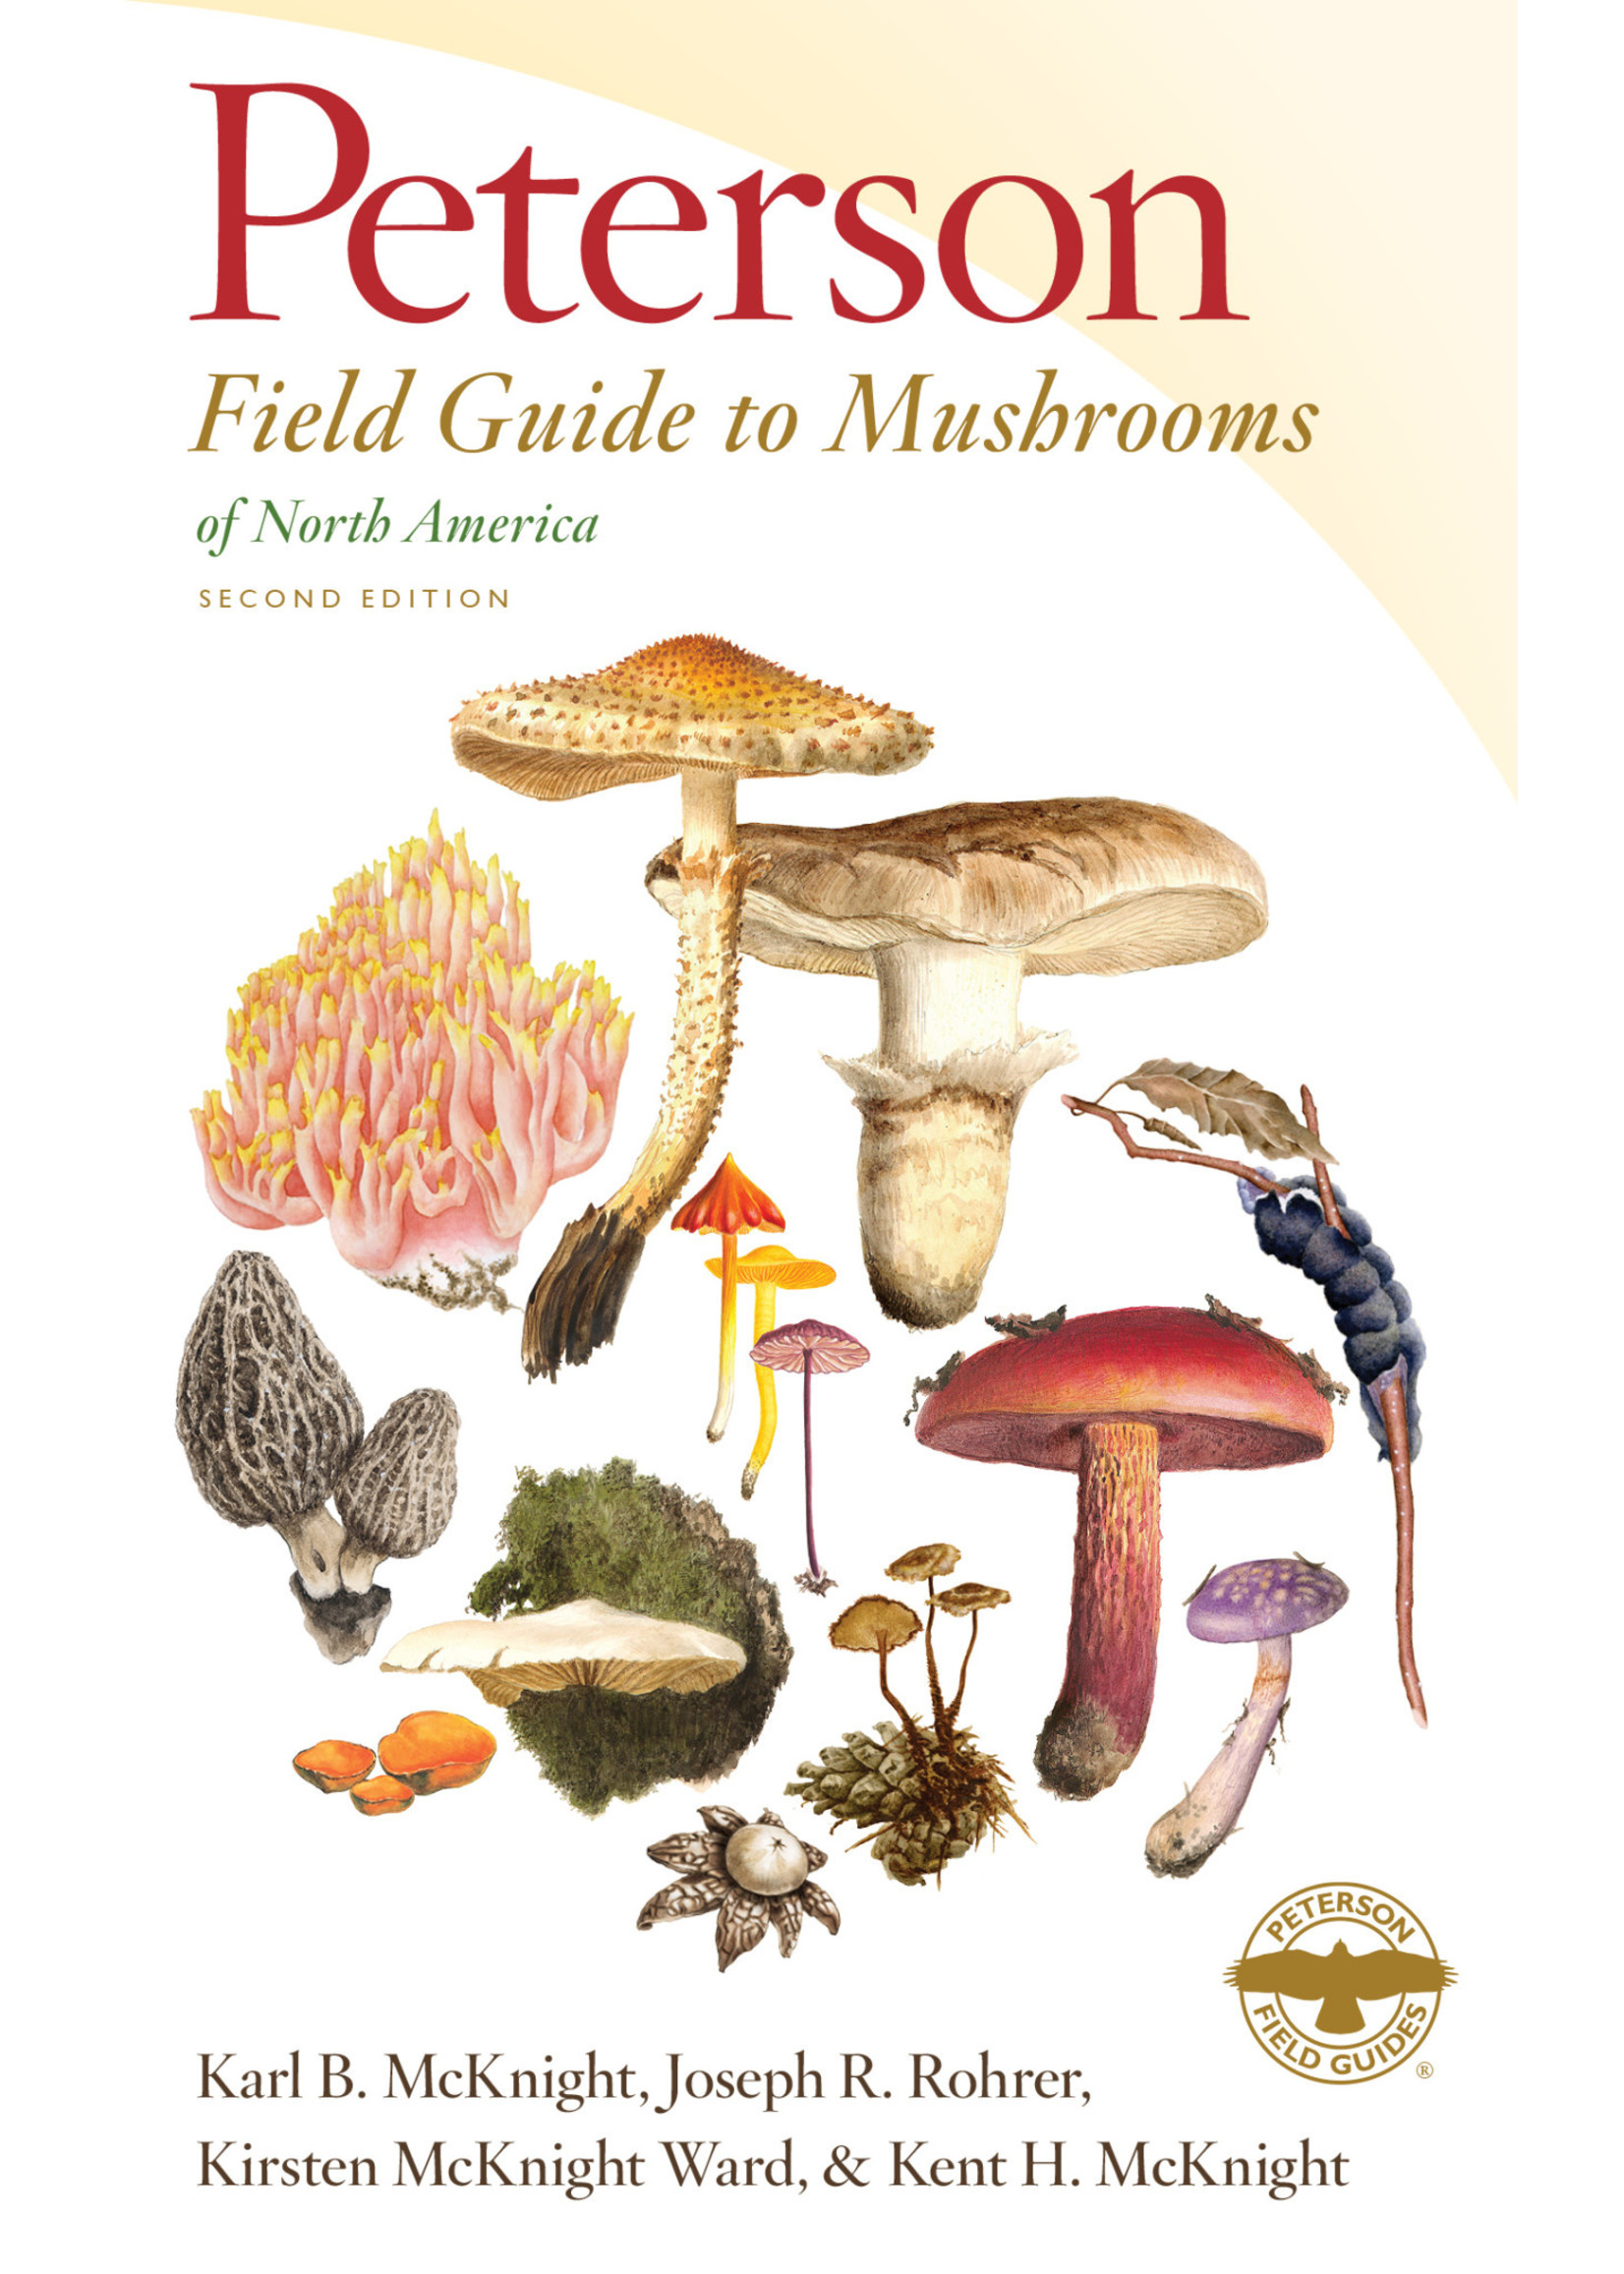 Peterson Field Guide to Mushrooms of North America (Peterson Field Guides #34) by Kent H. McKnight, Karl B. McKnight, Joseph R. Rohrer, Kirsten McKnight Ward